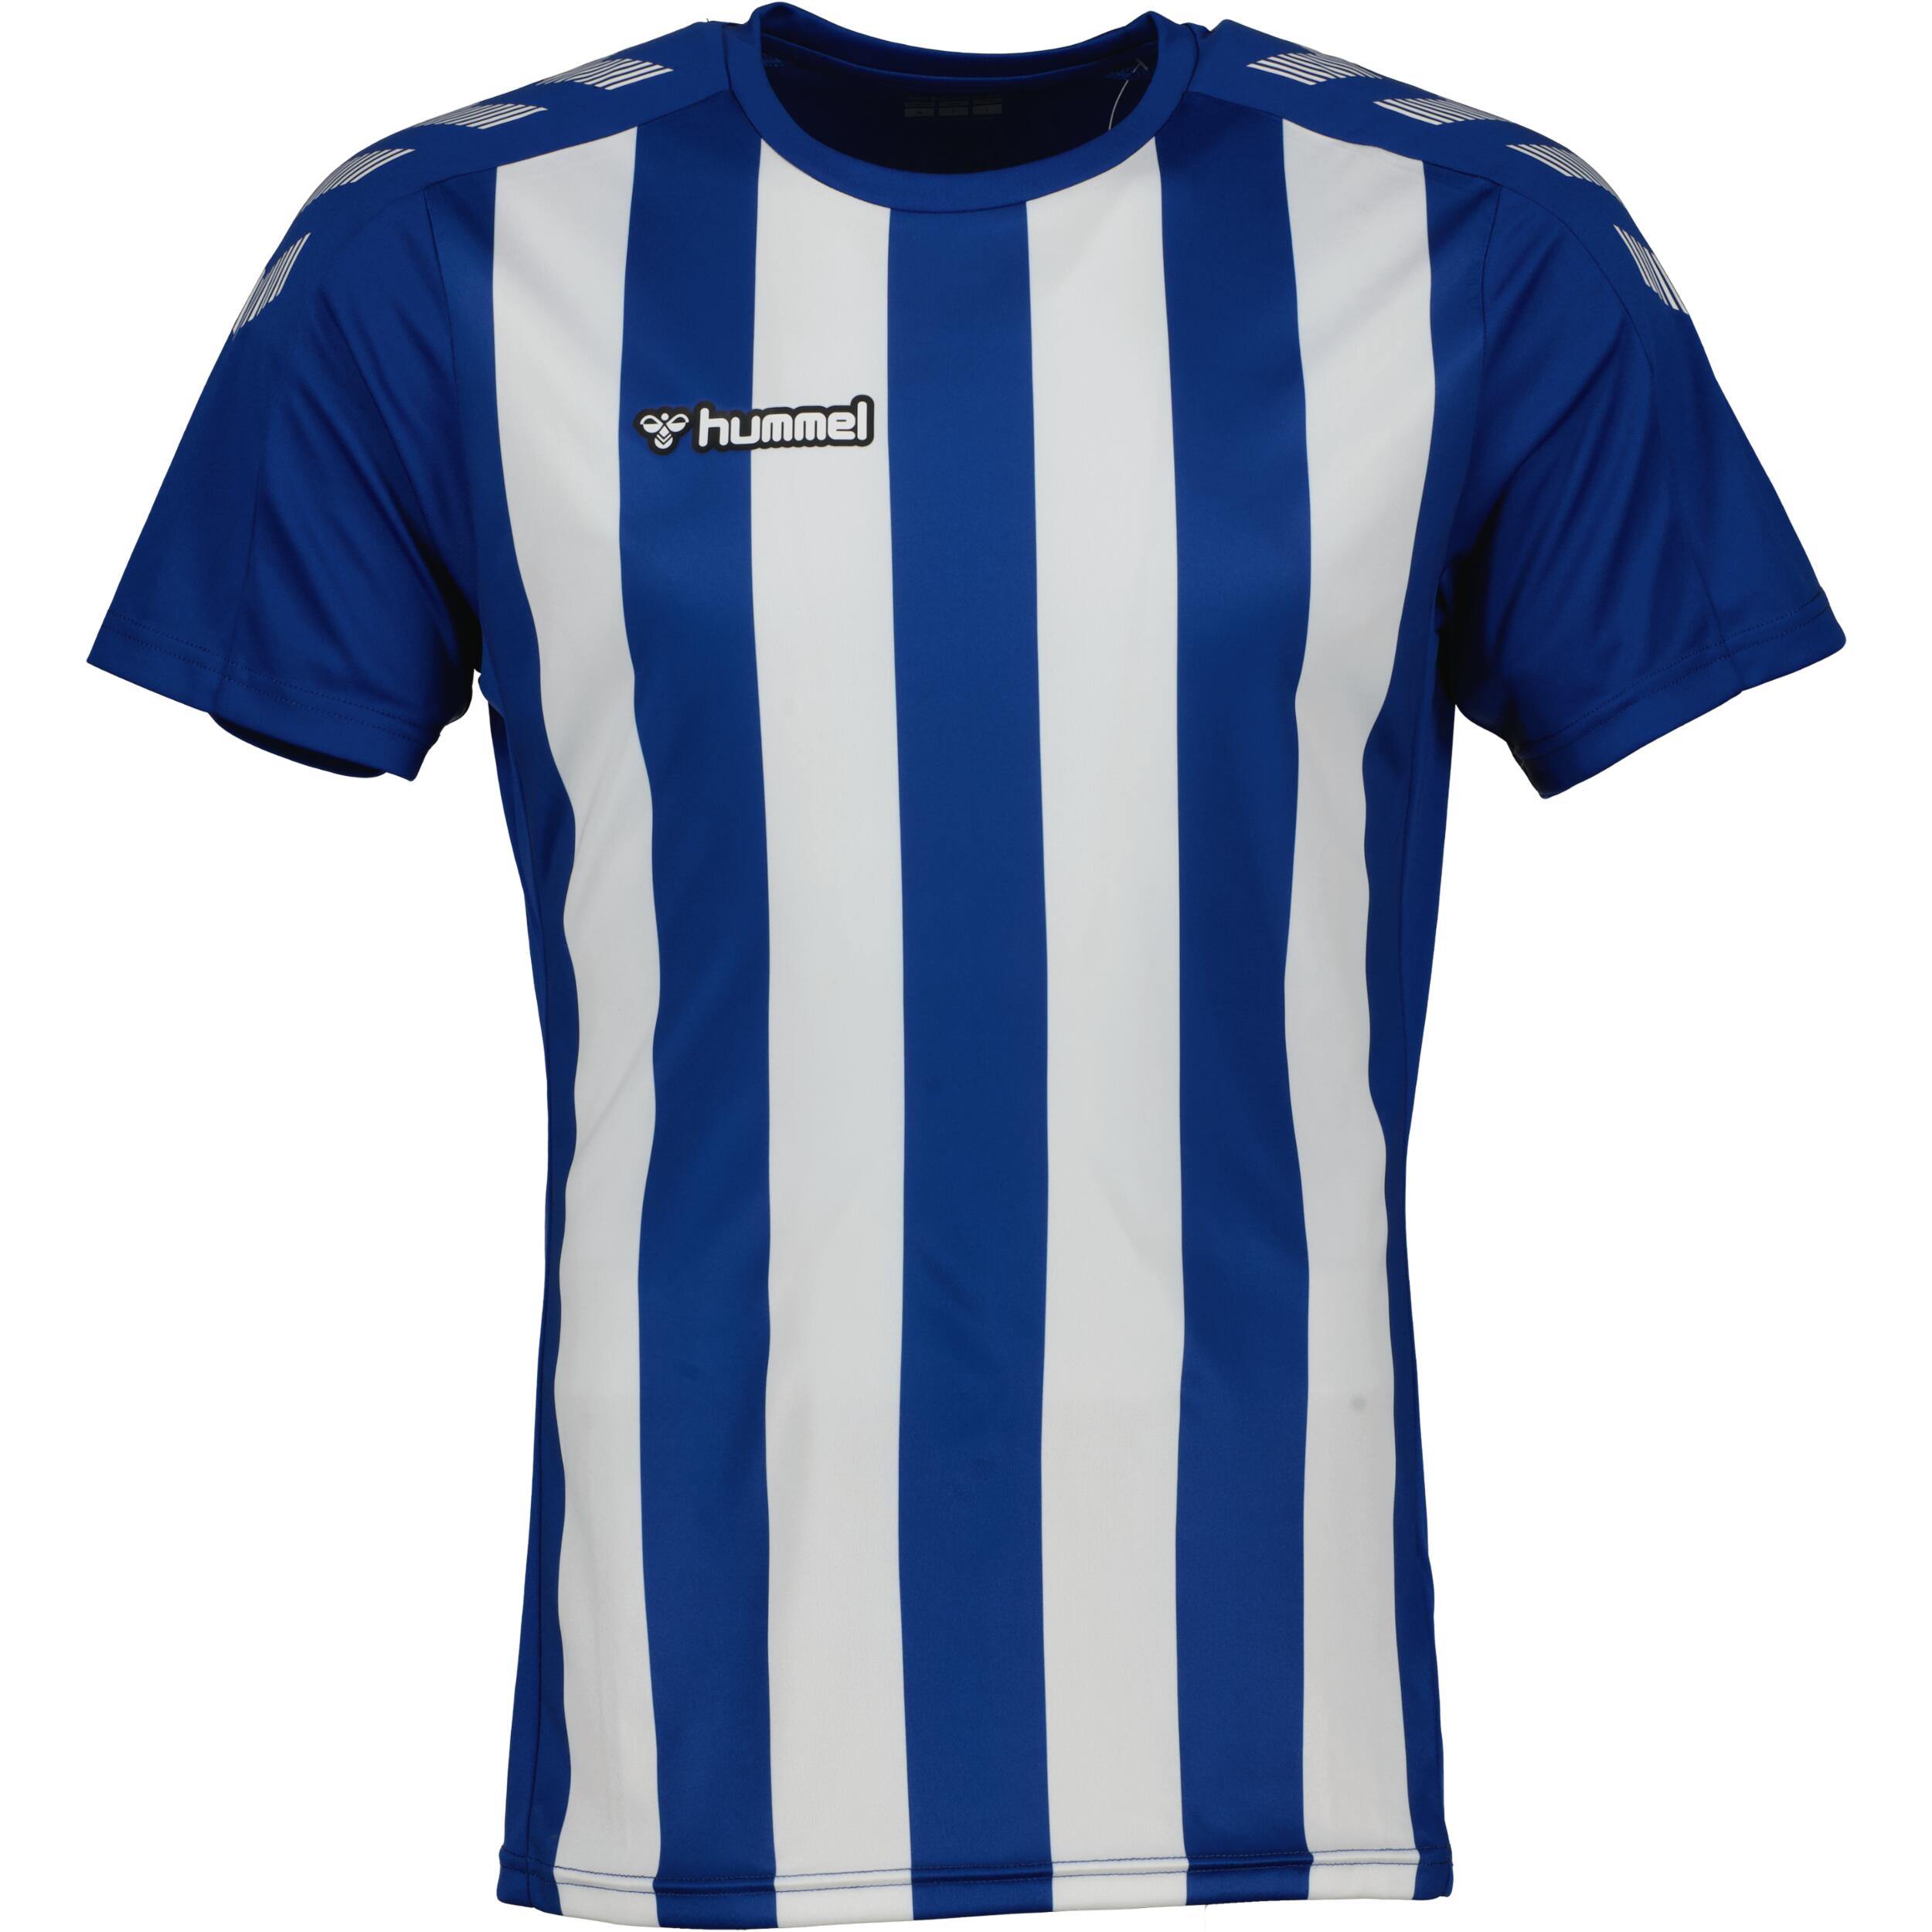 HUMMEL Stripe jersey for men, great for football, in true blue/white